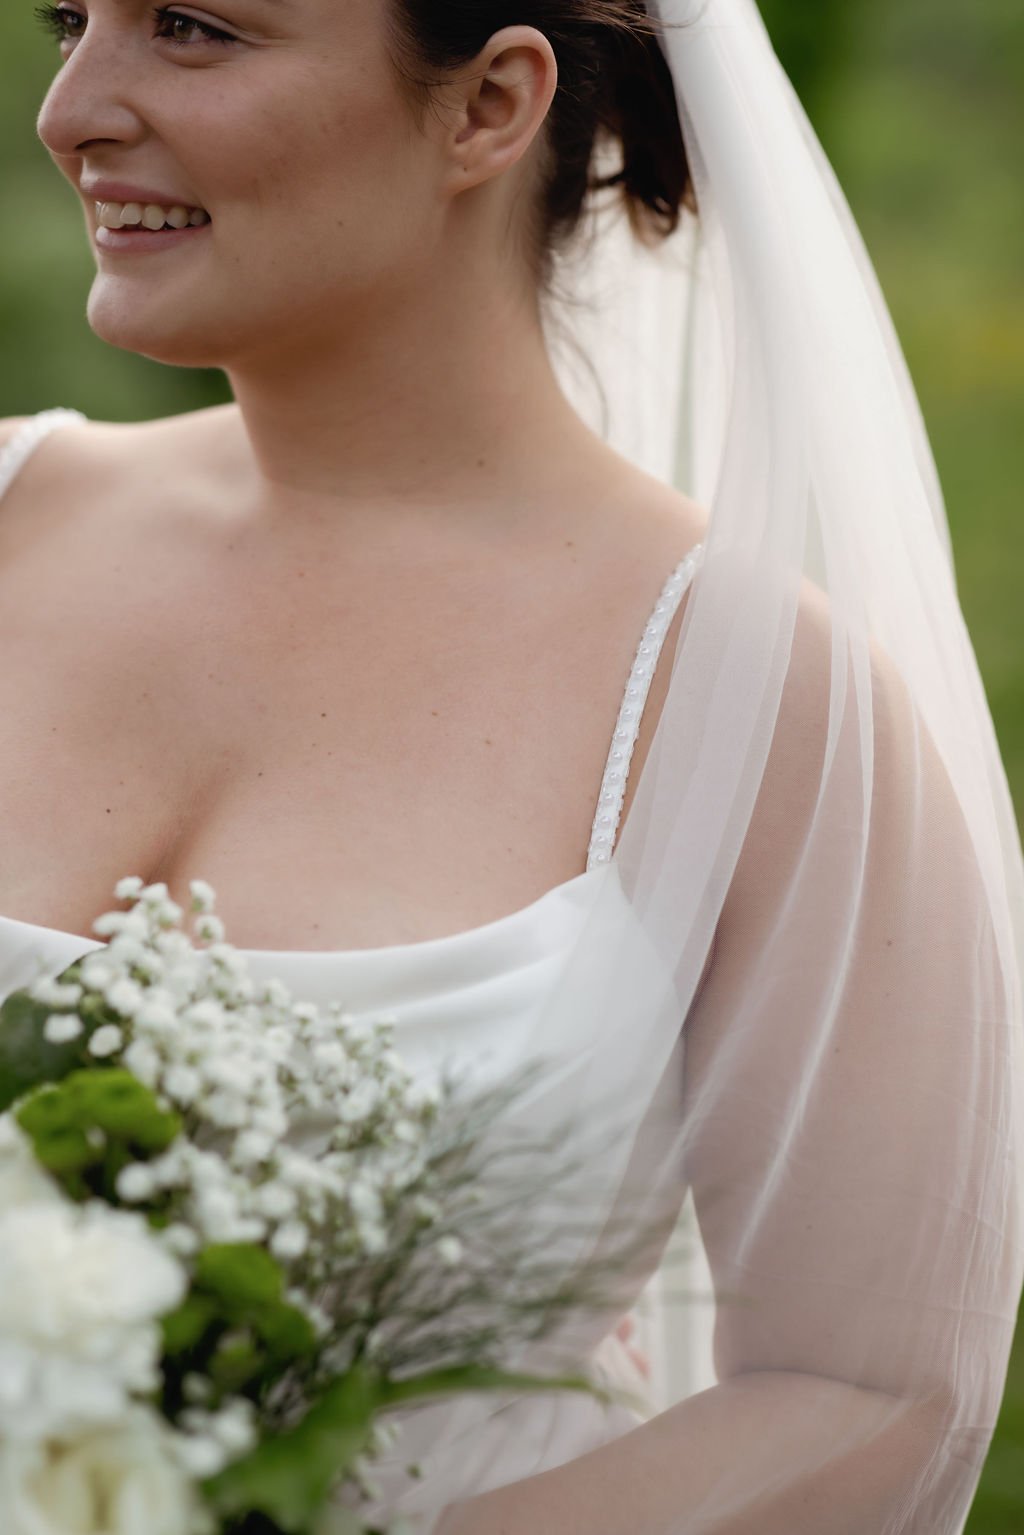 Gatlinburg-Wedding-Ceremony-Tips-bride